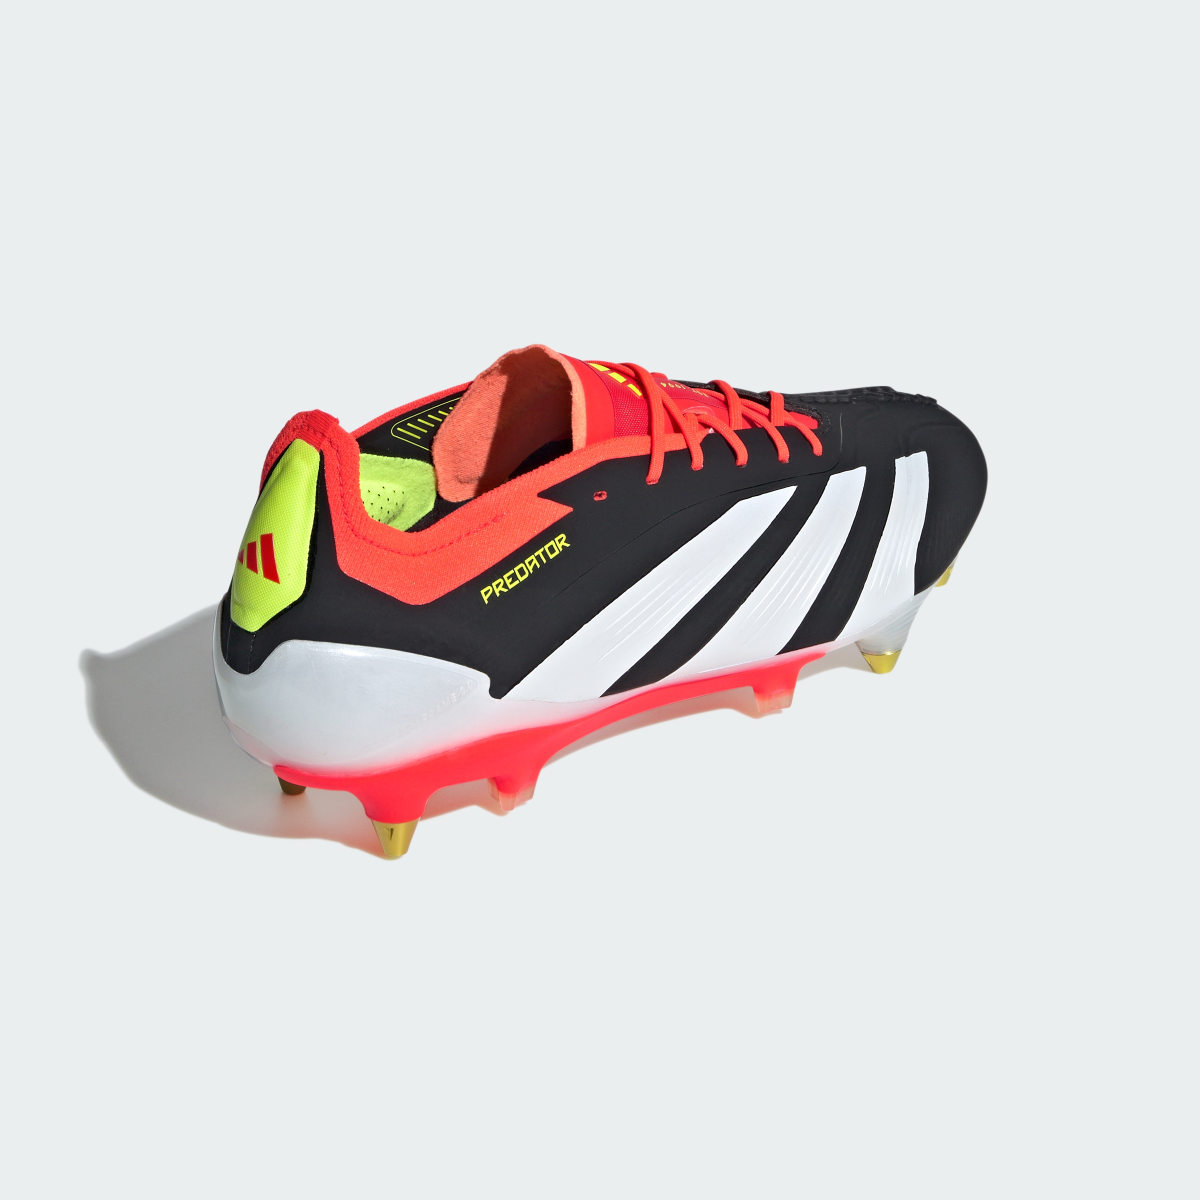 Adidas Predator Elite Soft Ground Football Boots. 9